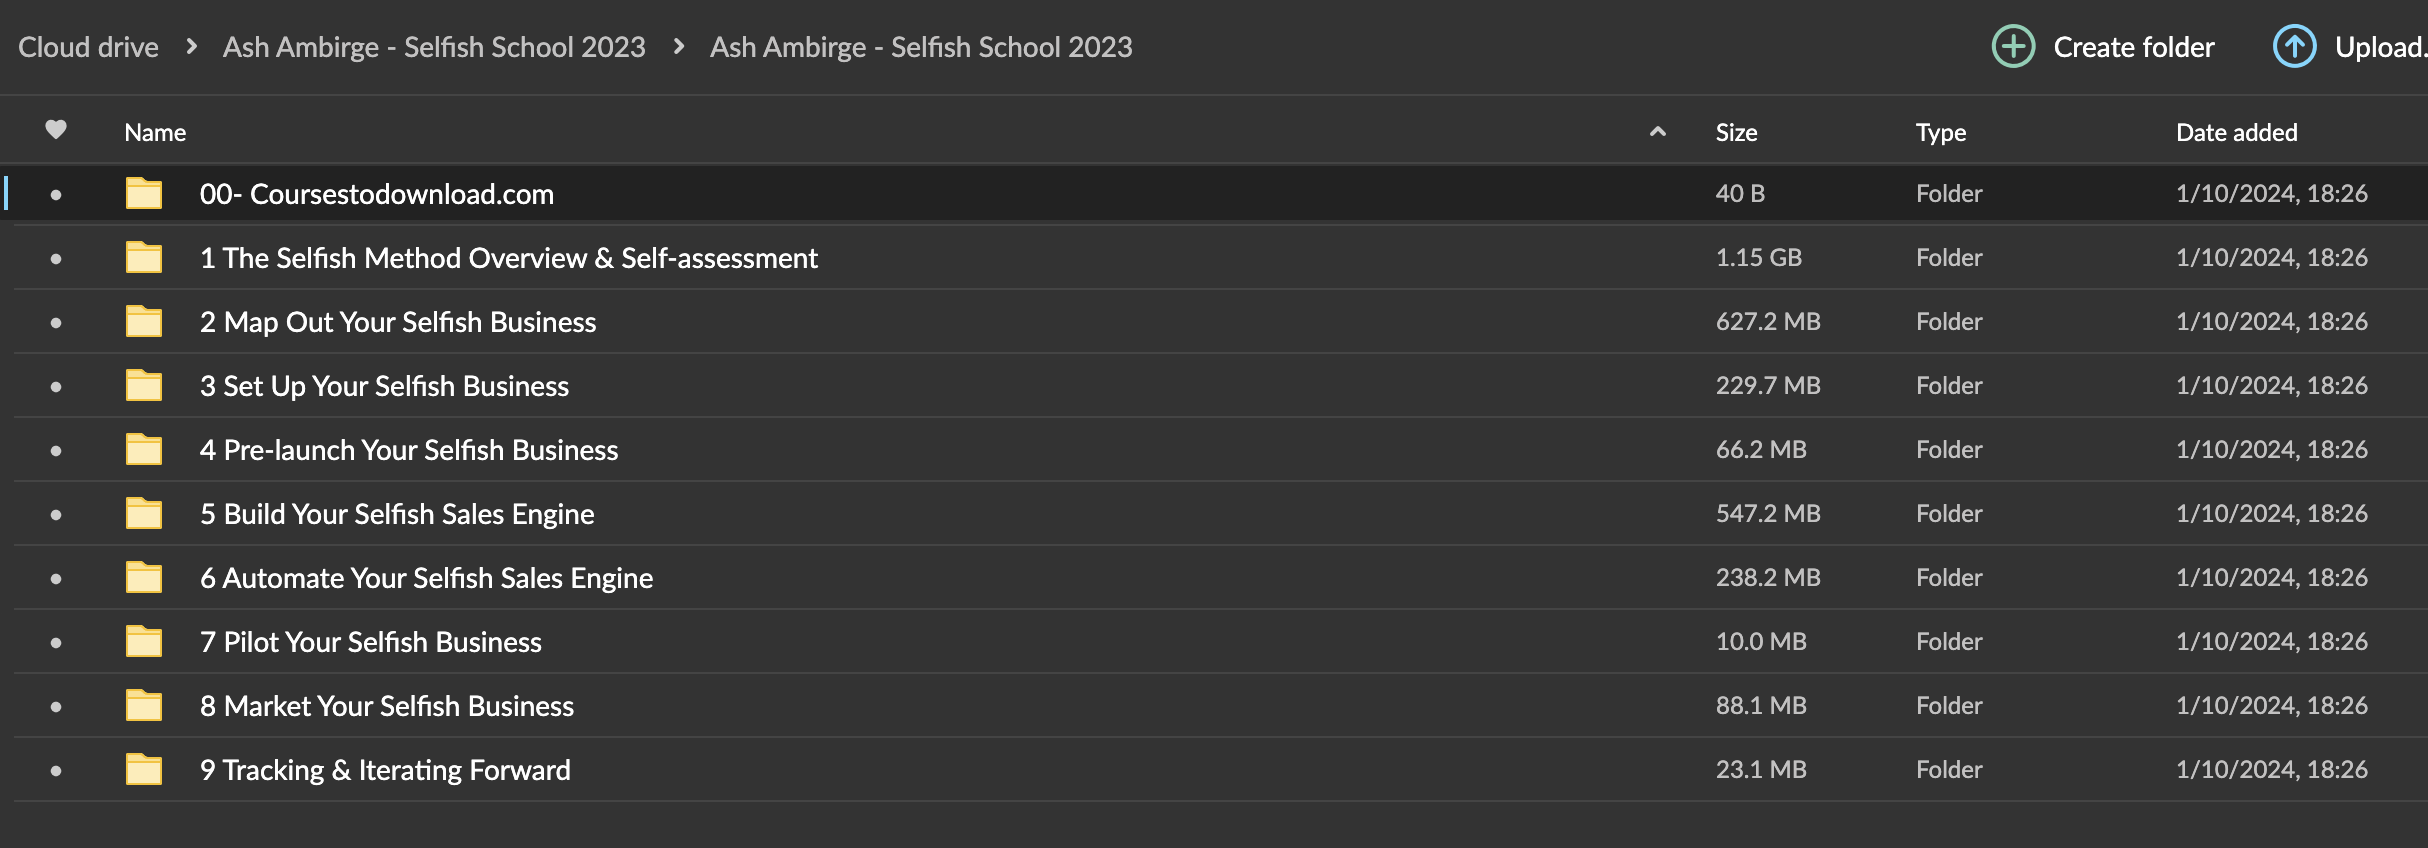 Ash Ambirge - Selfish School 2023 Download